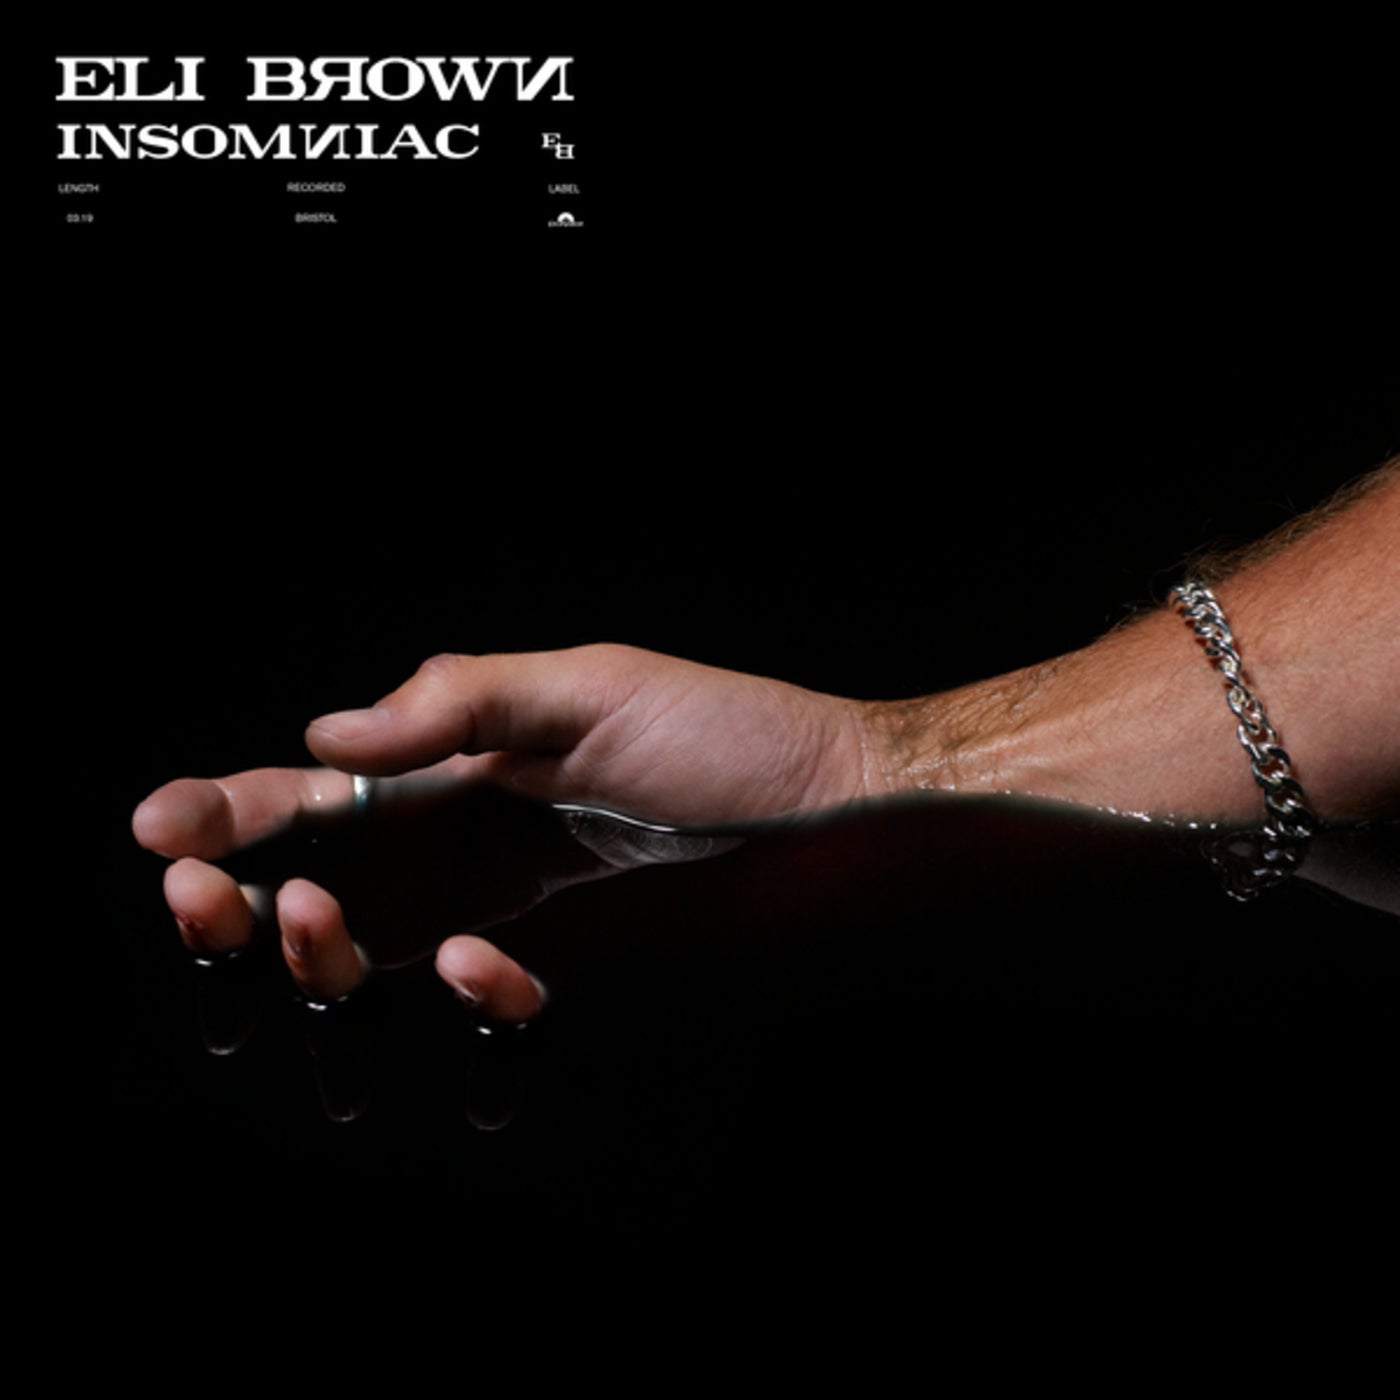 Eli Brown — Insomniac (extended) on Revolution Radio